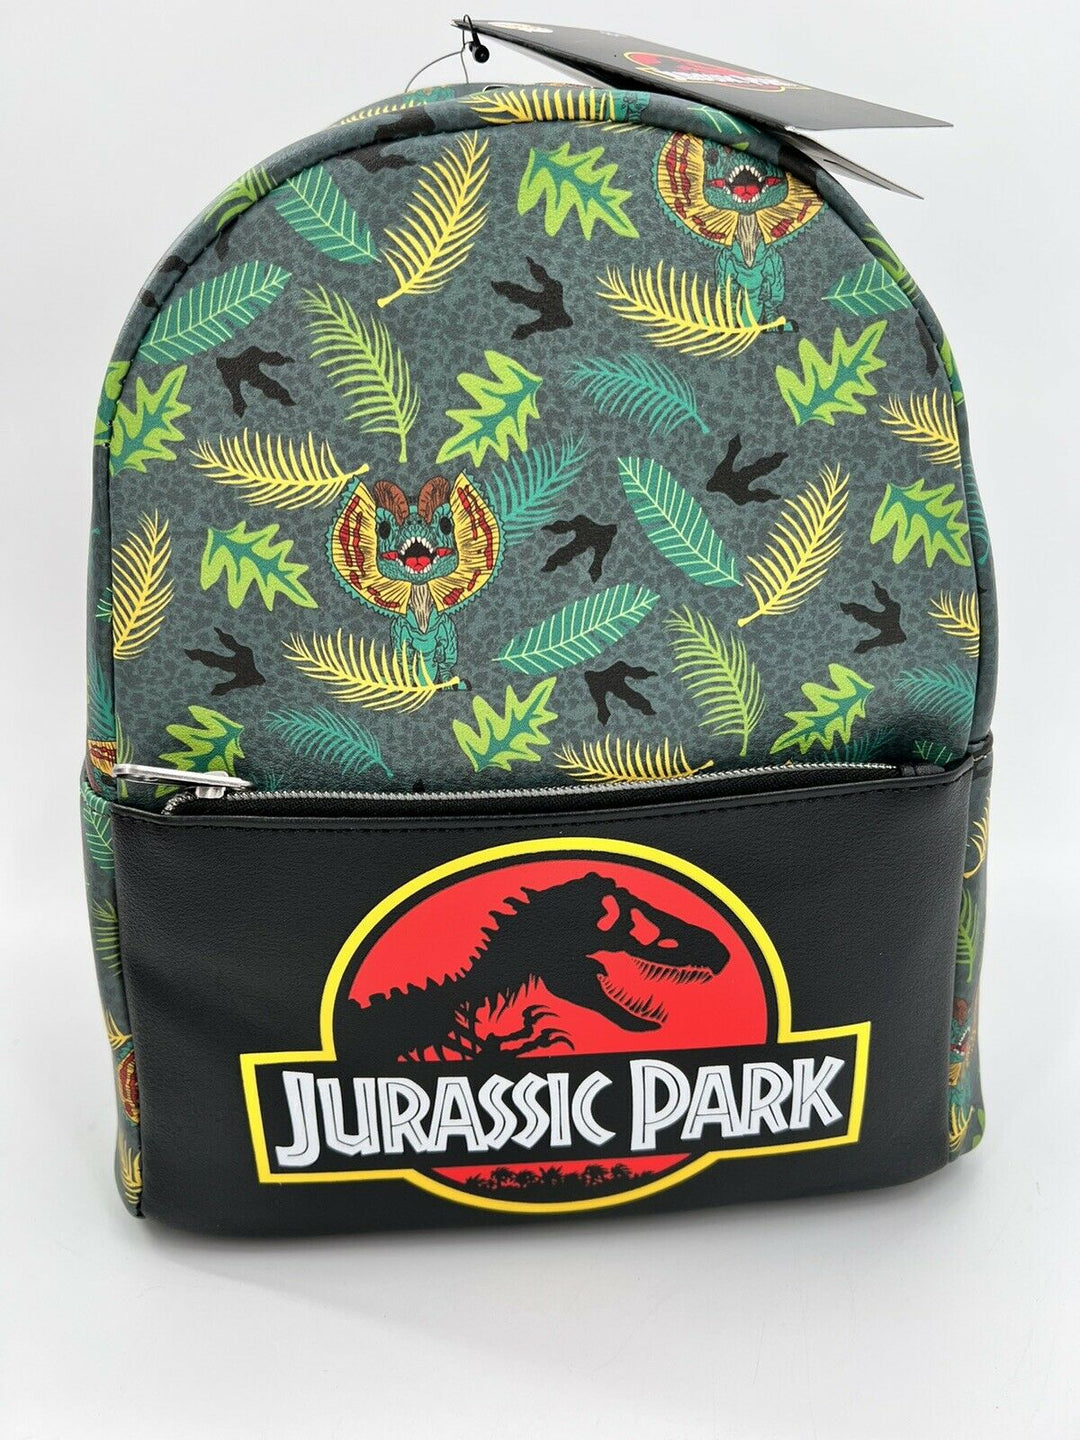 Jurassic Park Backpack - gabescaveccc